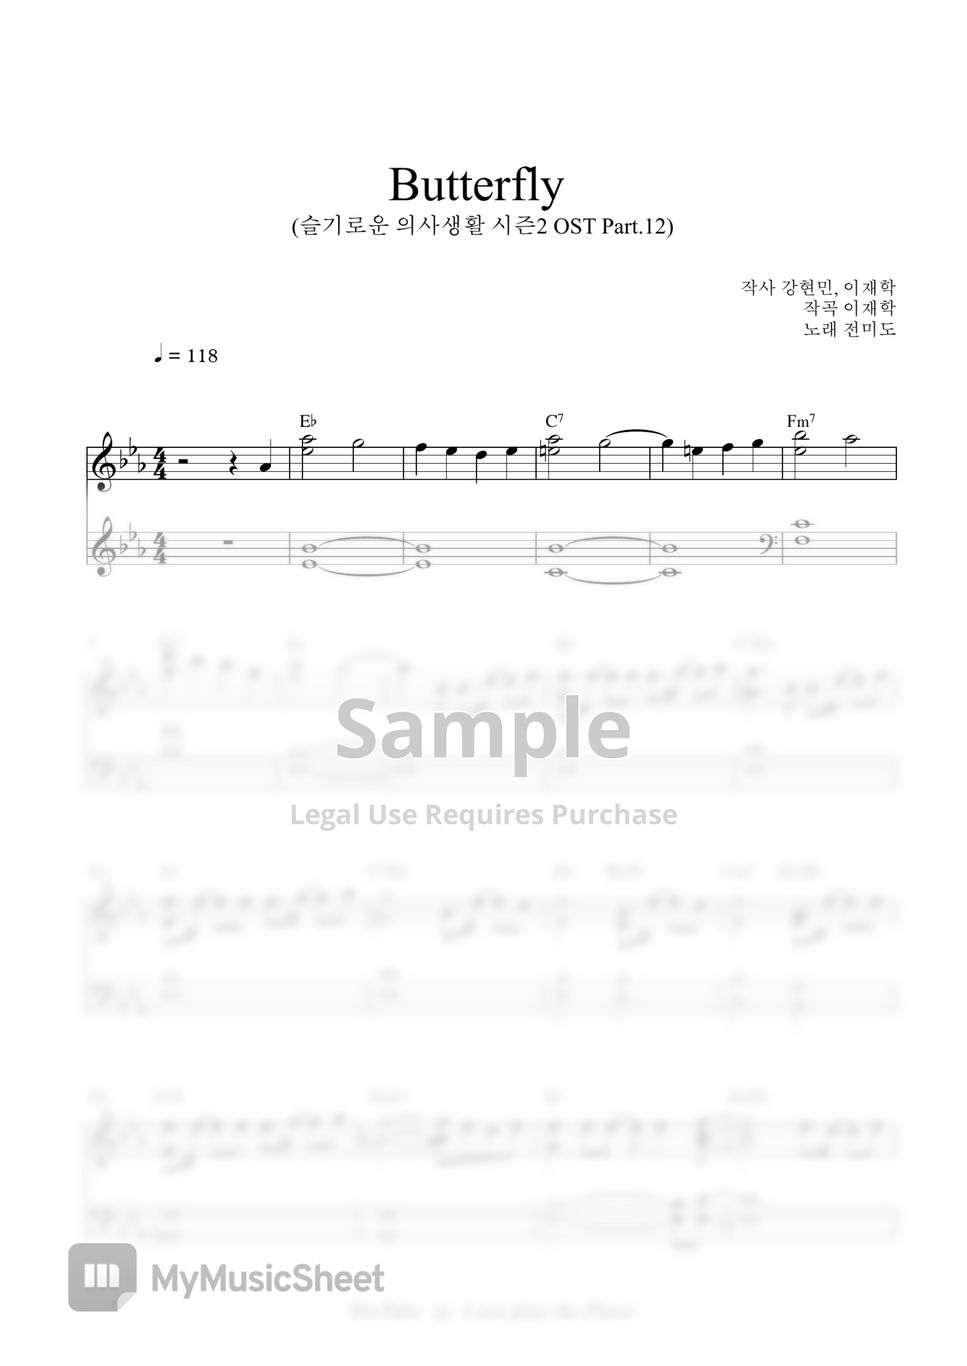 Jeon Mi Do (전미도) - Butterfly (버터플라이) Hospital Playlist by I can play the Piano